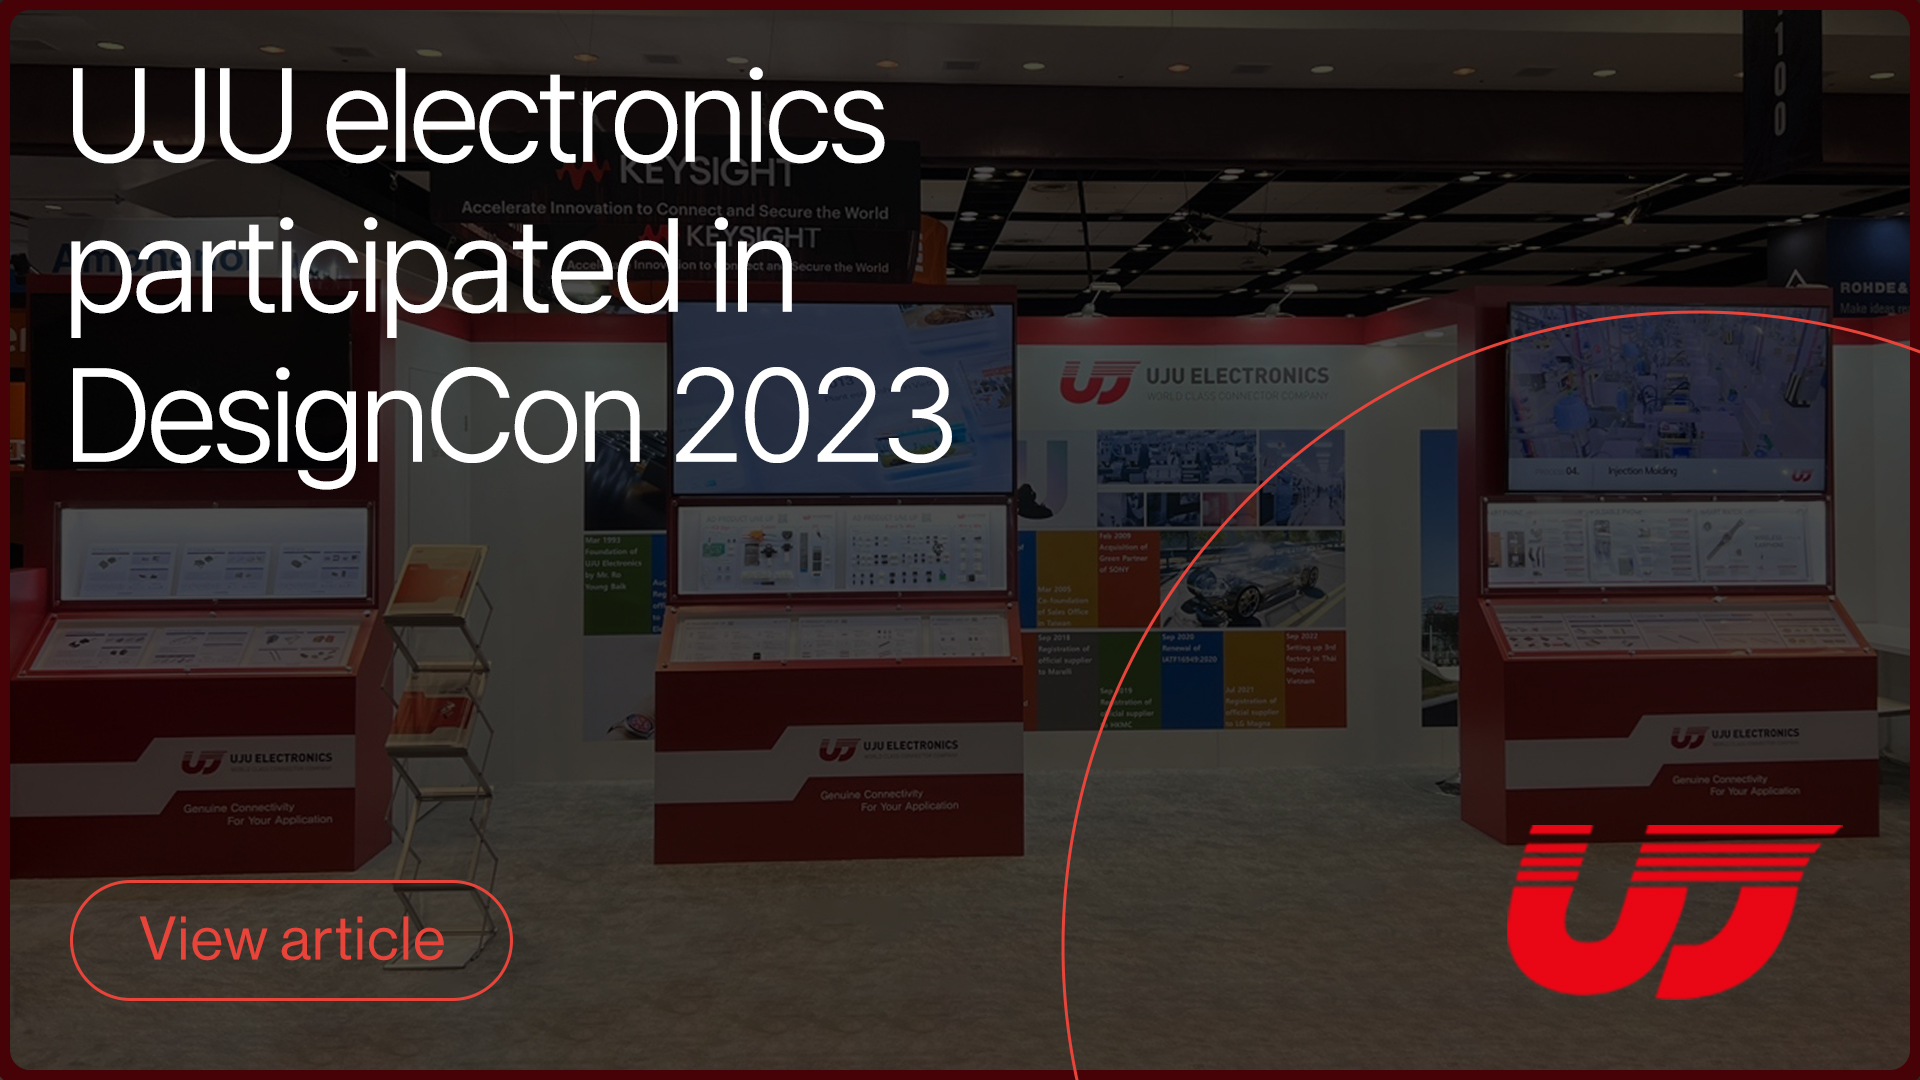 UJU electronics participated in DesignCon 2023